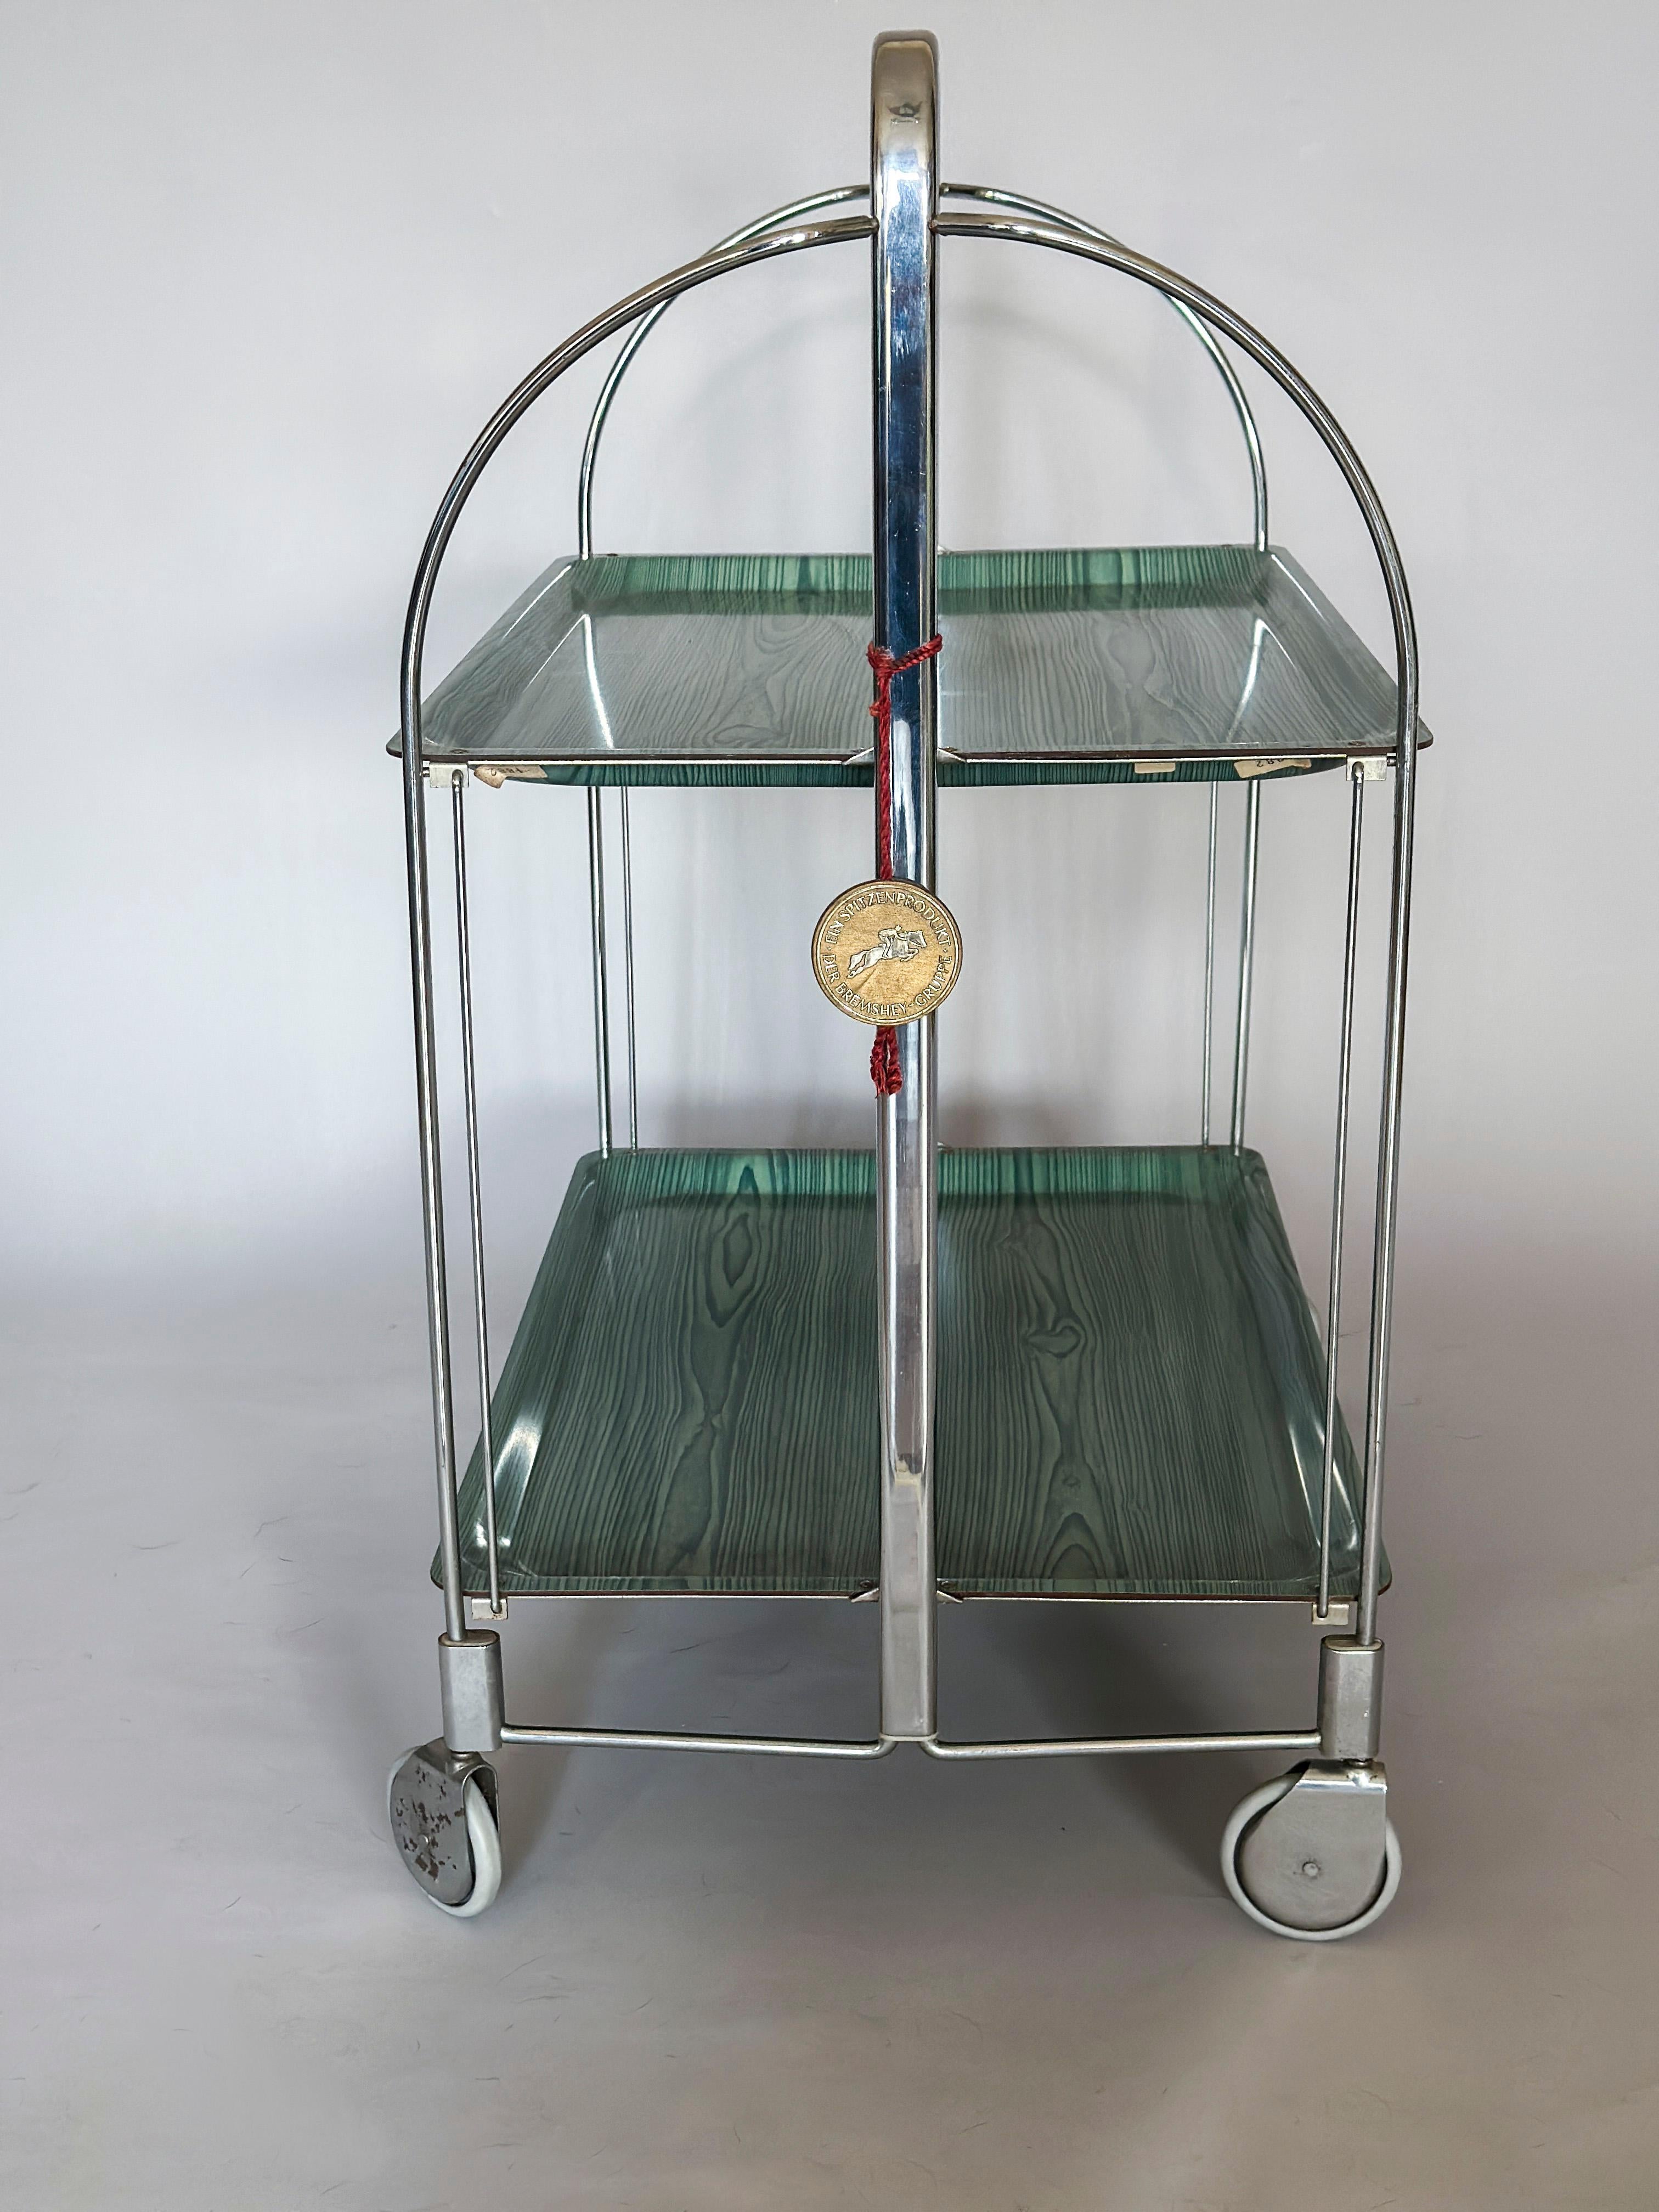 20th Century Mid-Century Modern Folding Bar Cart Trolley from Gerlinol For Sale